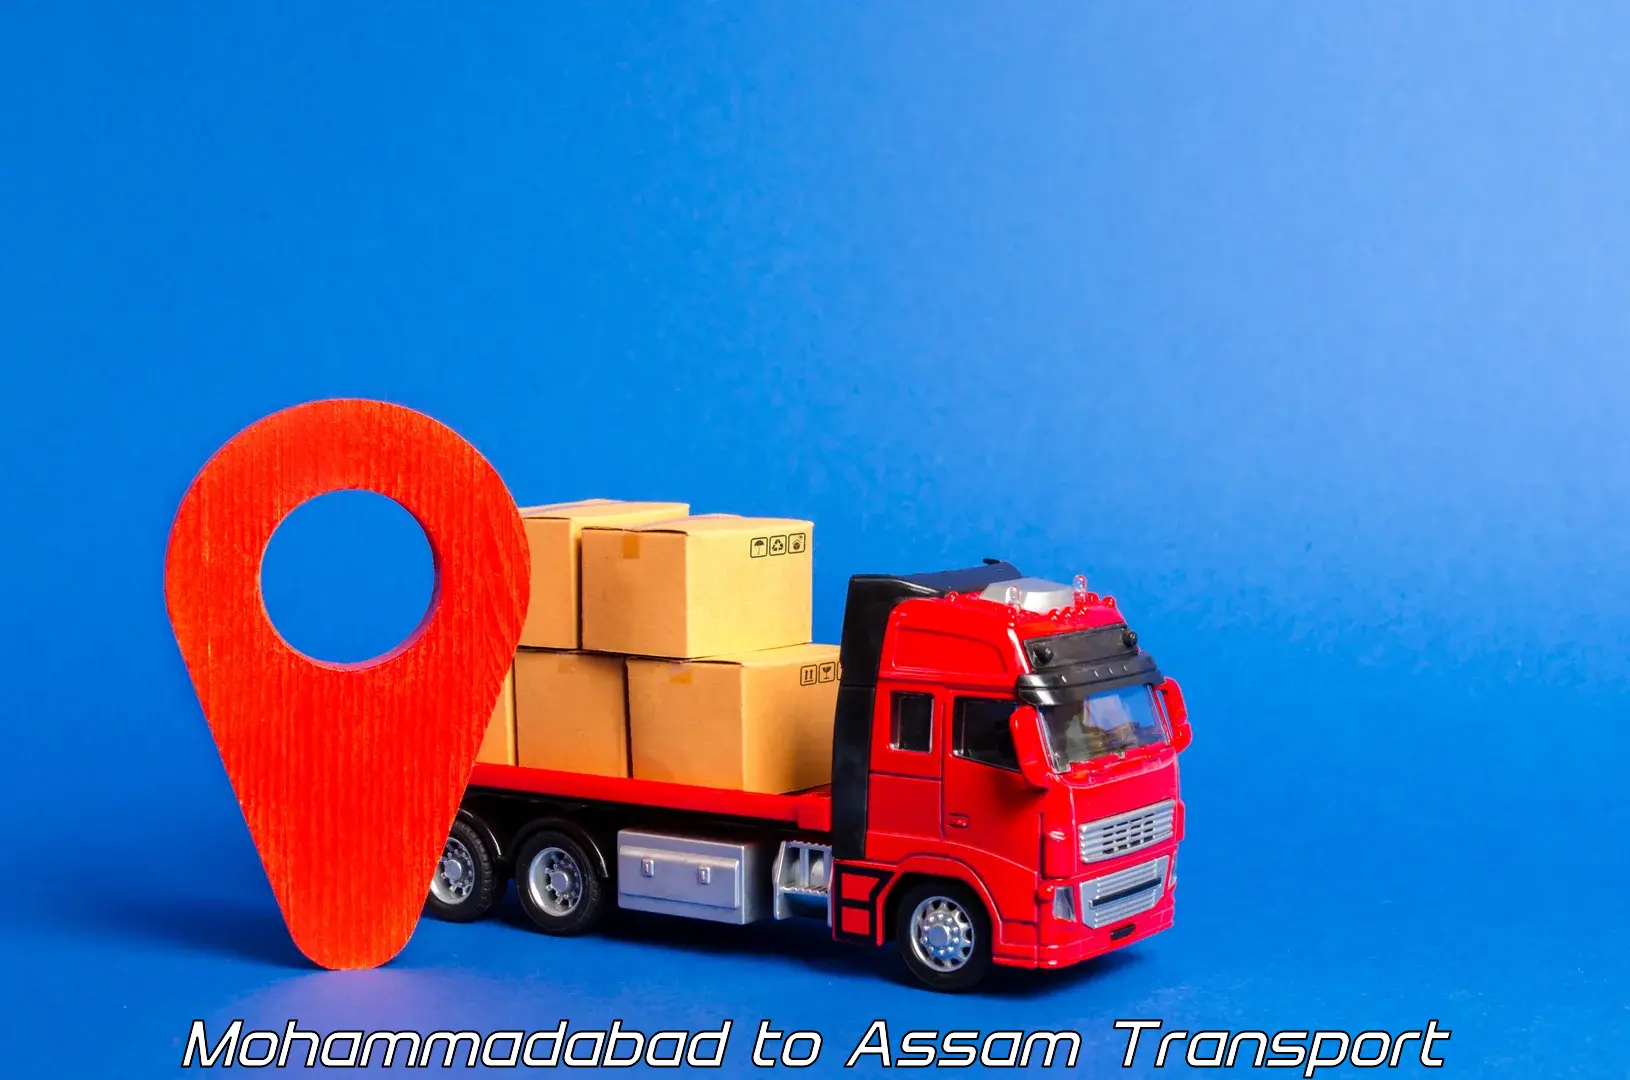 Truck transport companies in India Mohammadabad to Thelamara